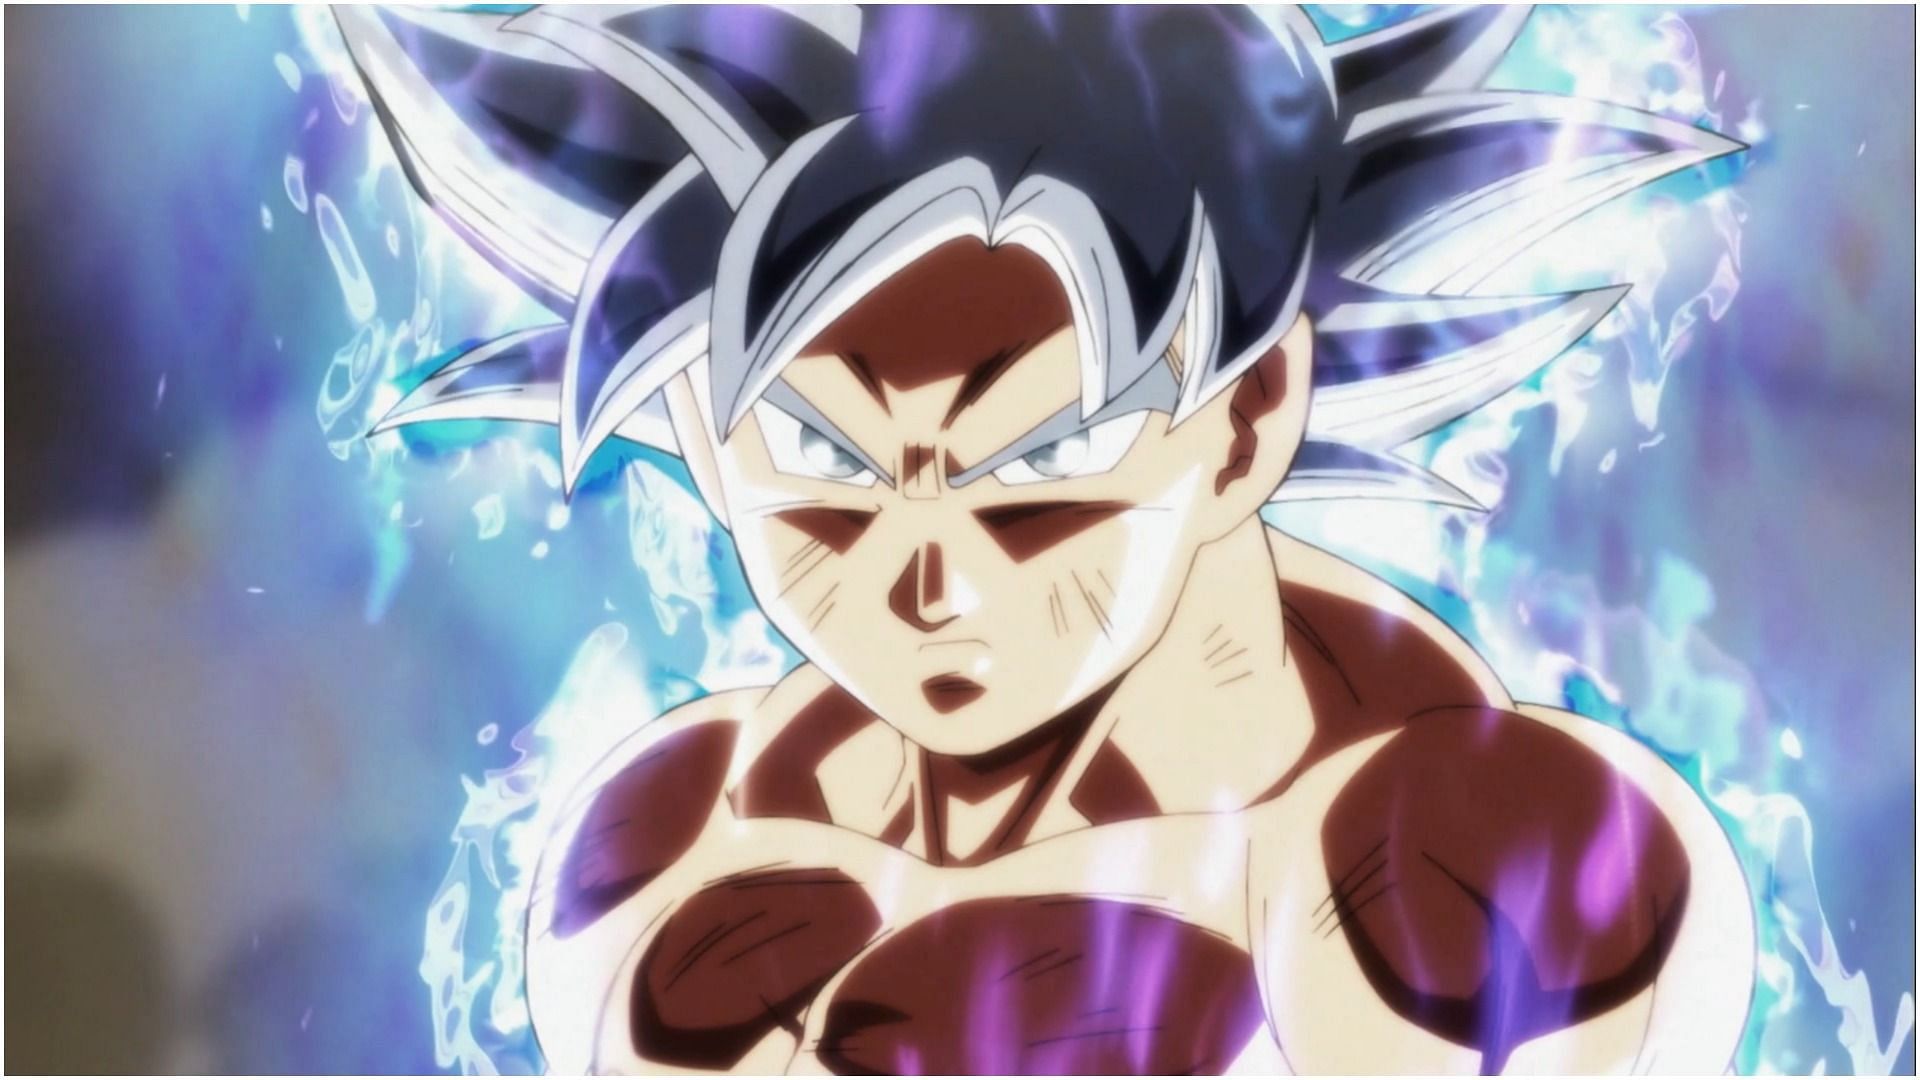 Goku as seen in the anime Dragon Ball (Image via Toei Animation)